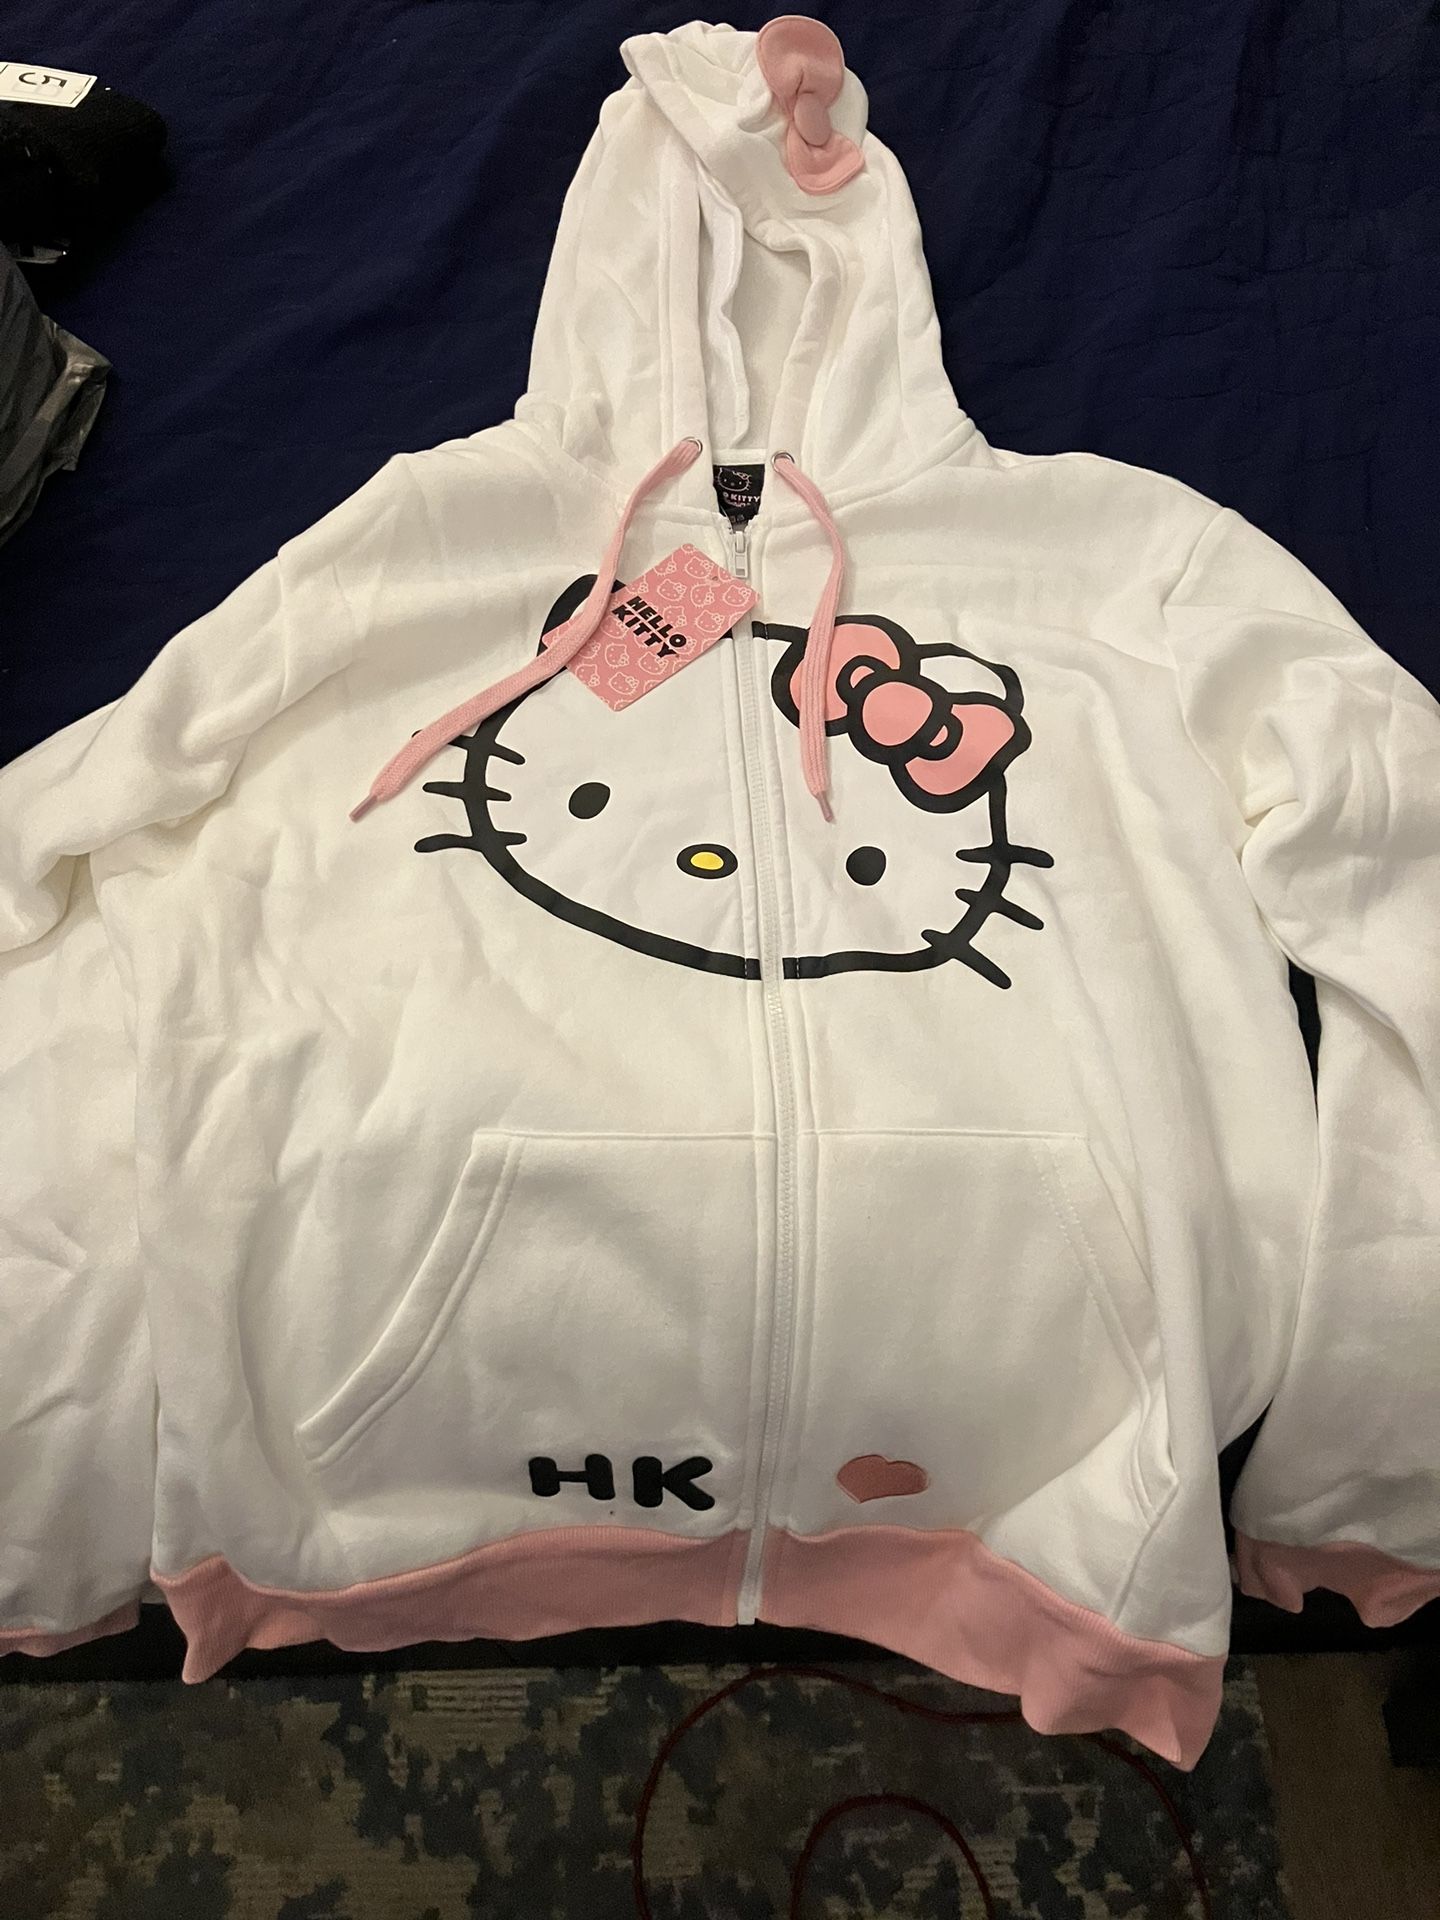 Hello Kitty Sweatshirt